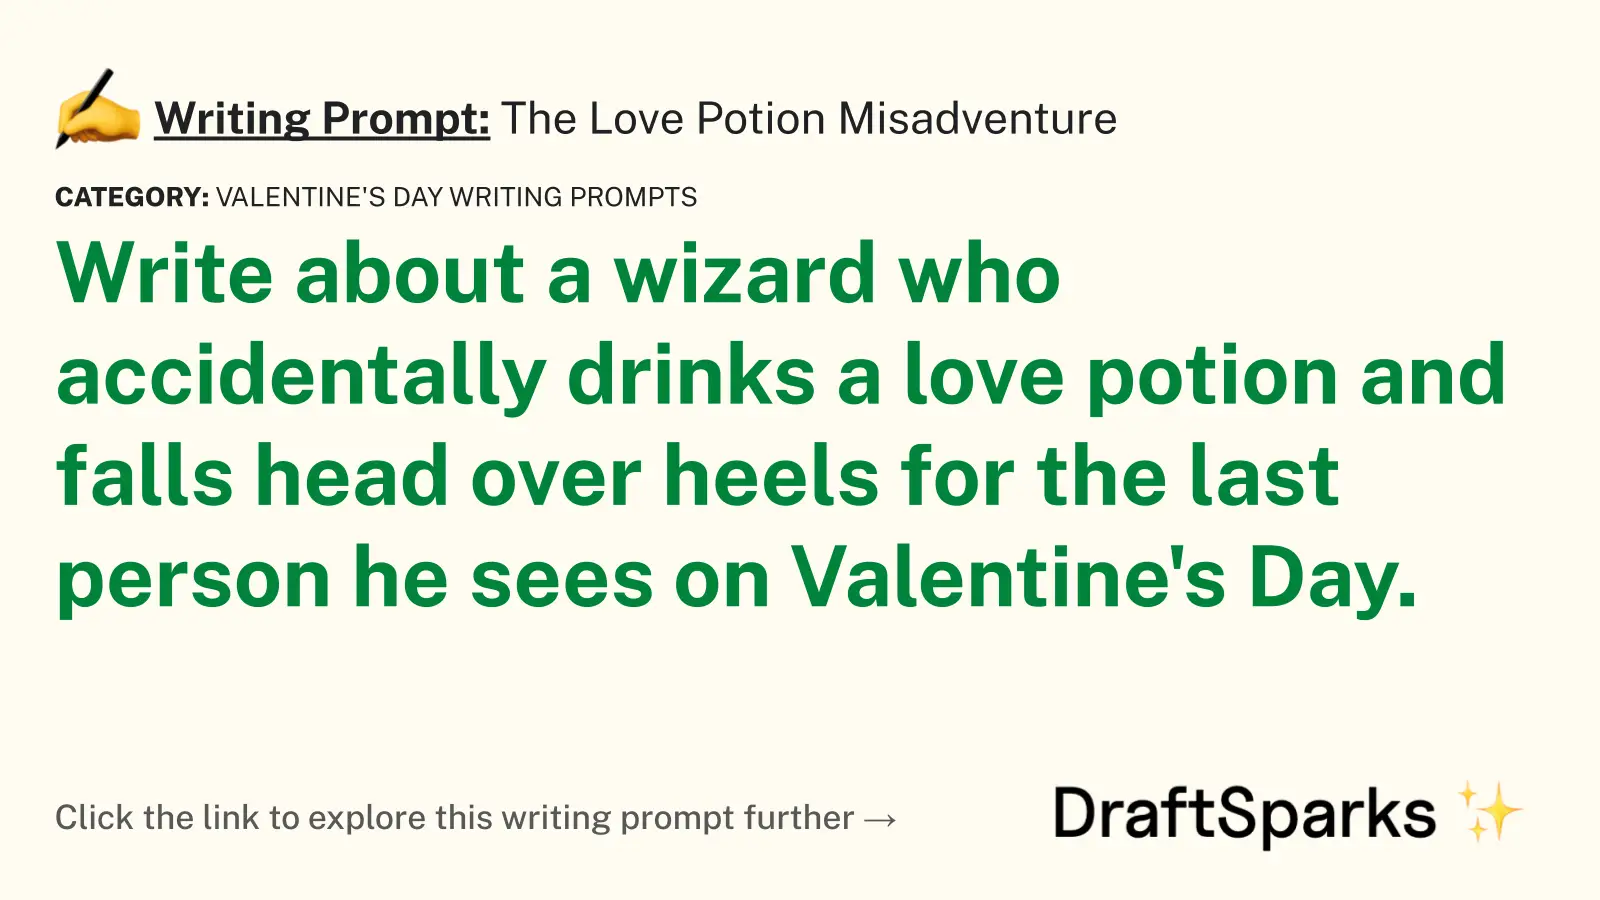 The Love Potion Misadventure